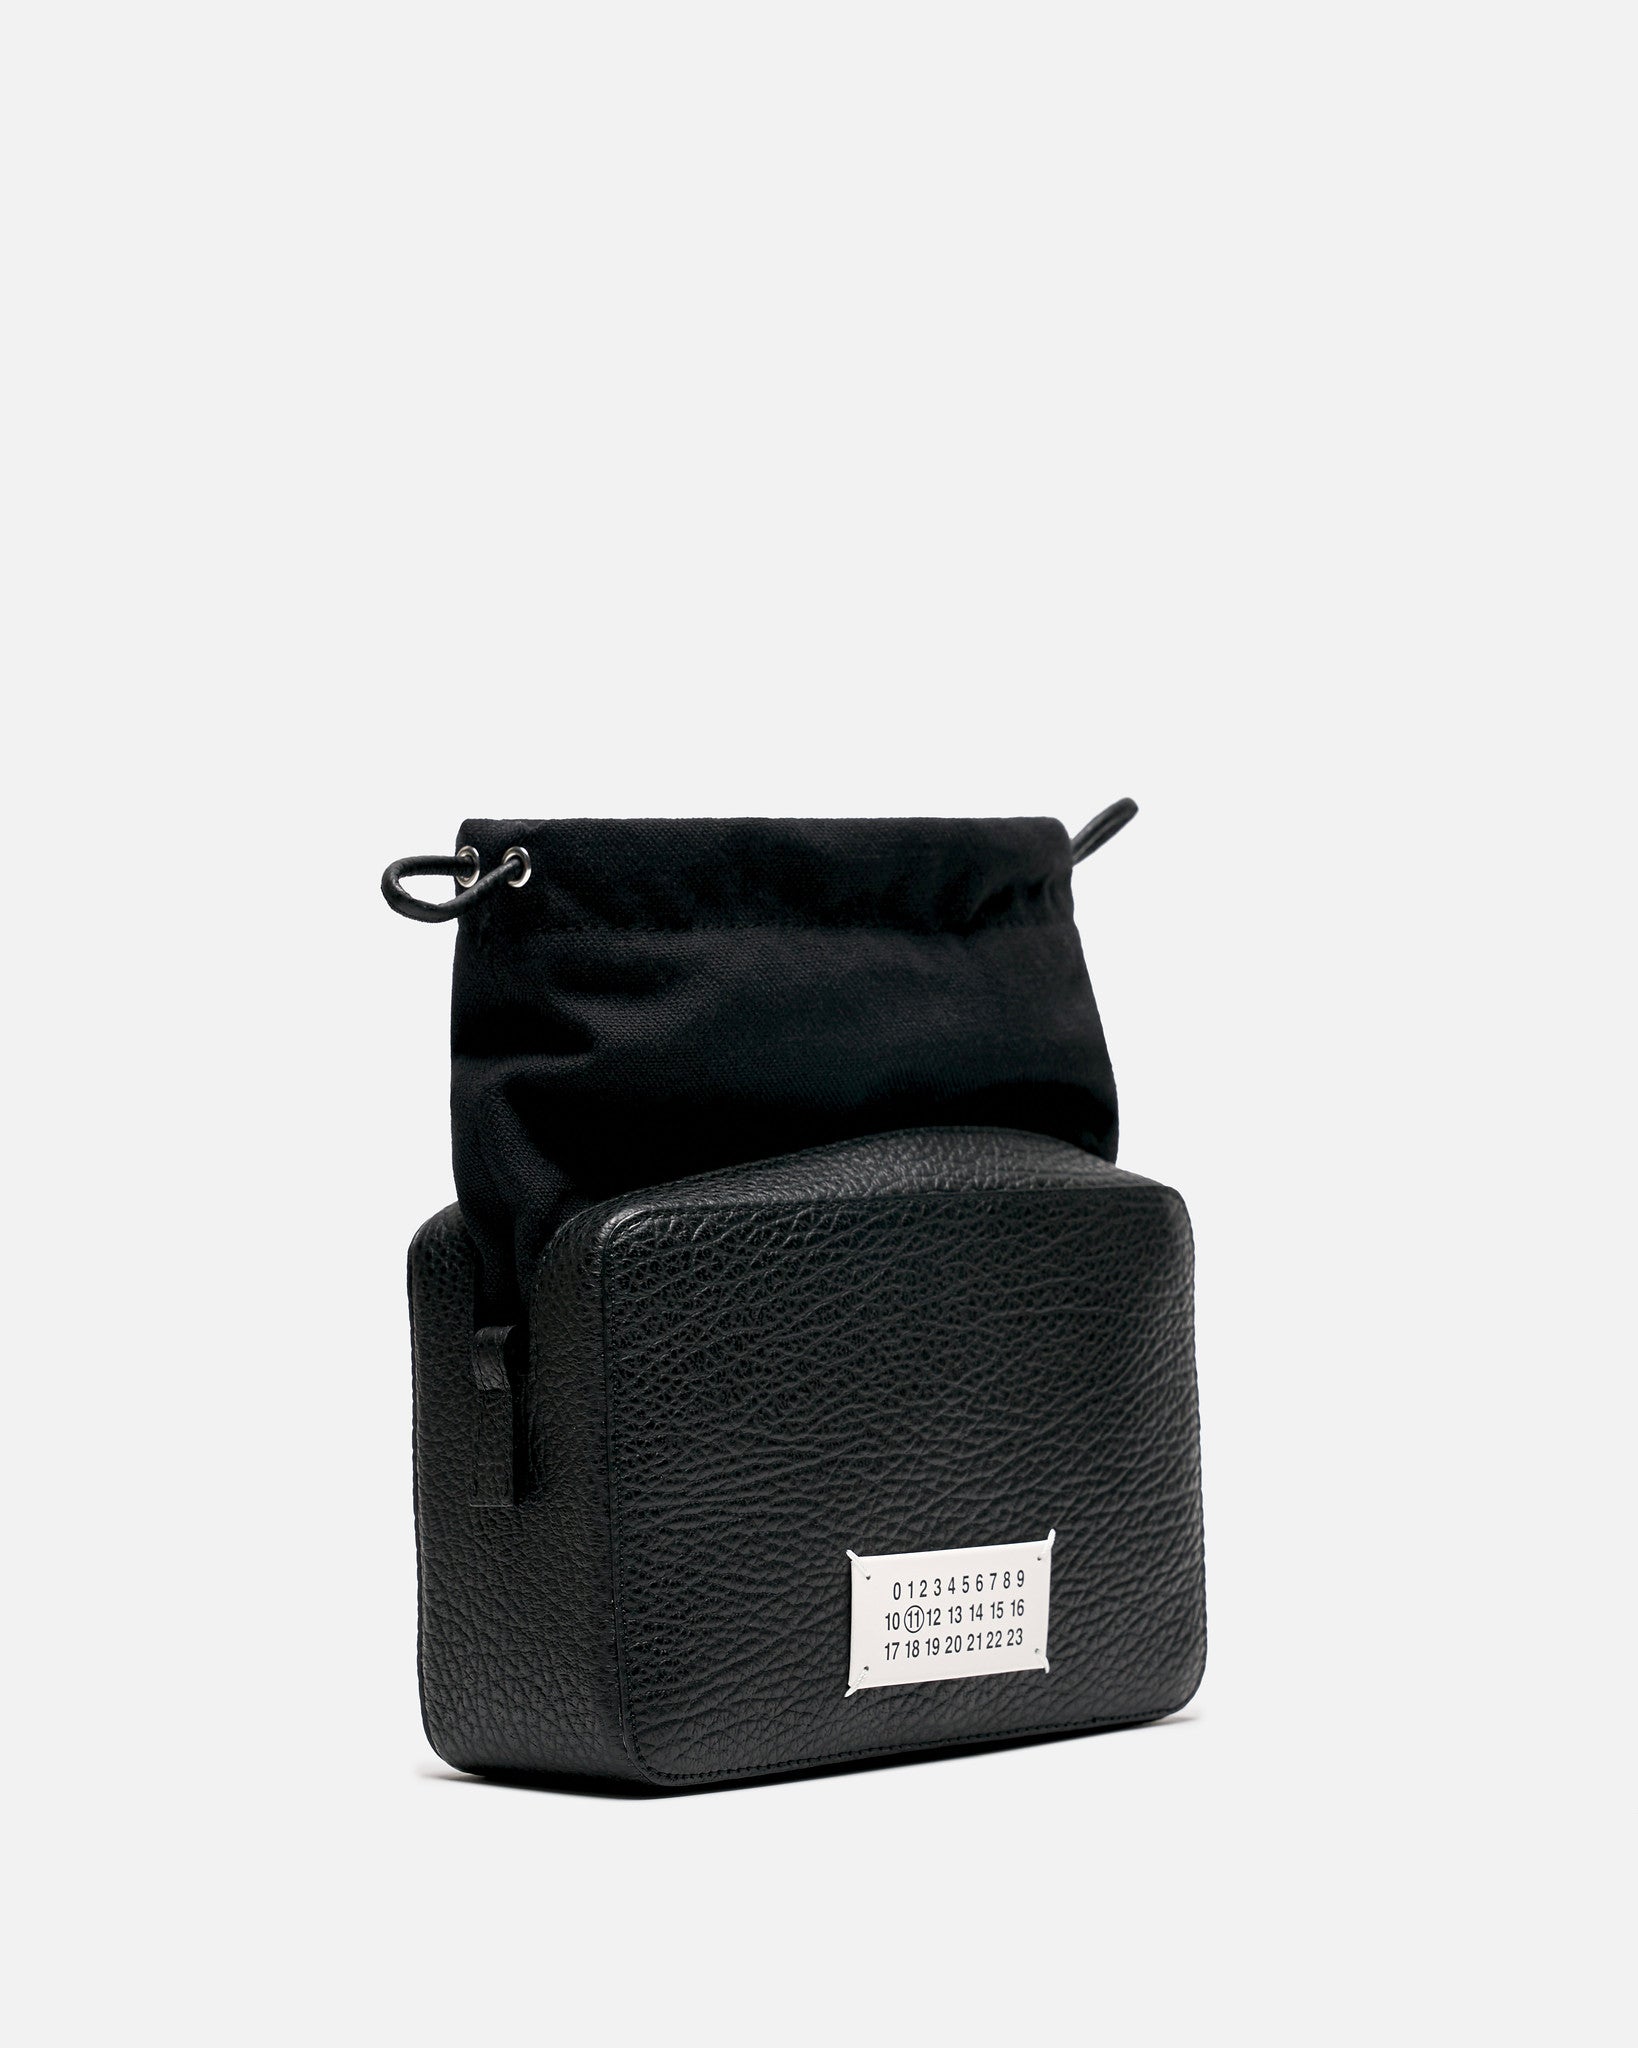 Maison Margiela Men's Bags O/S 5AC Medium Camera Bag in Black